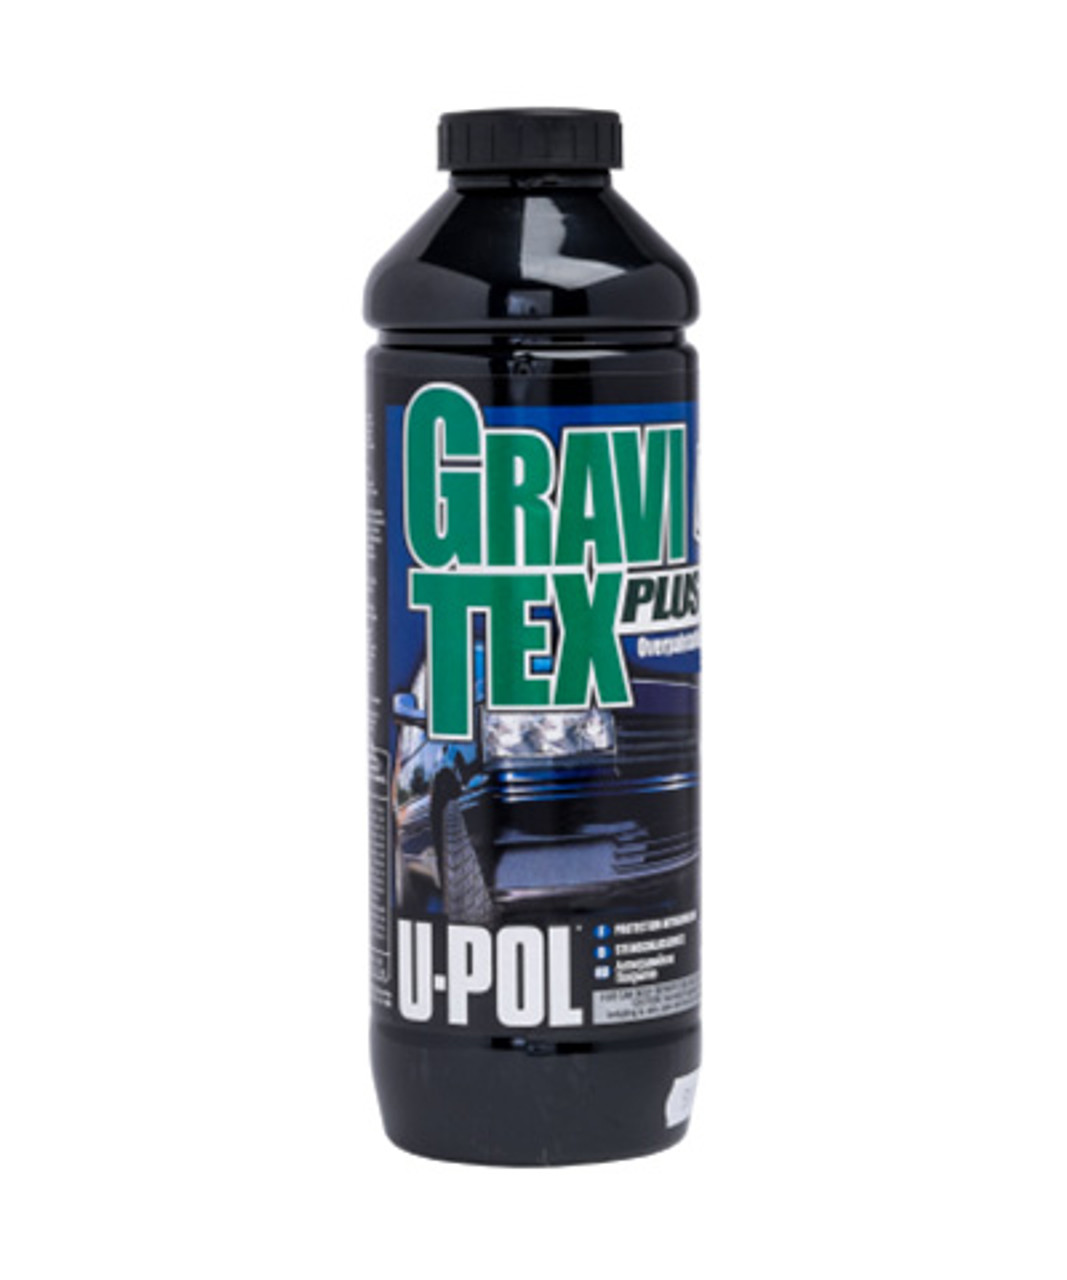 Upol Gravitex HS Plus (Solvent) Black 1Lt